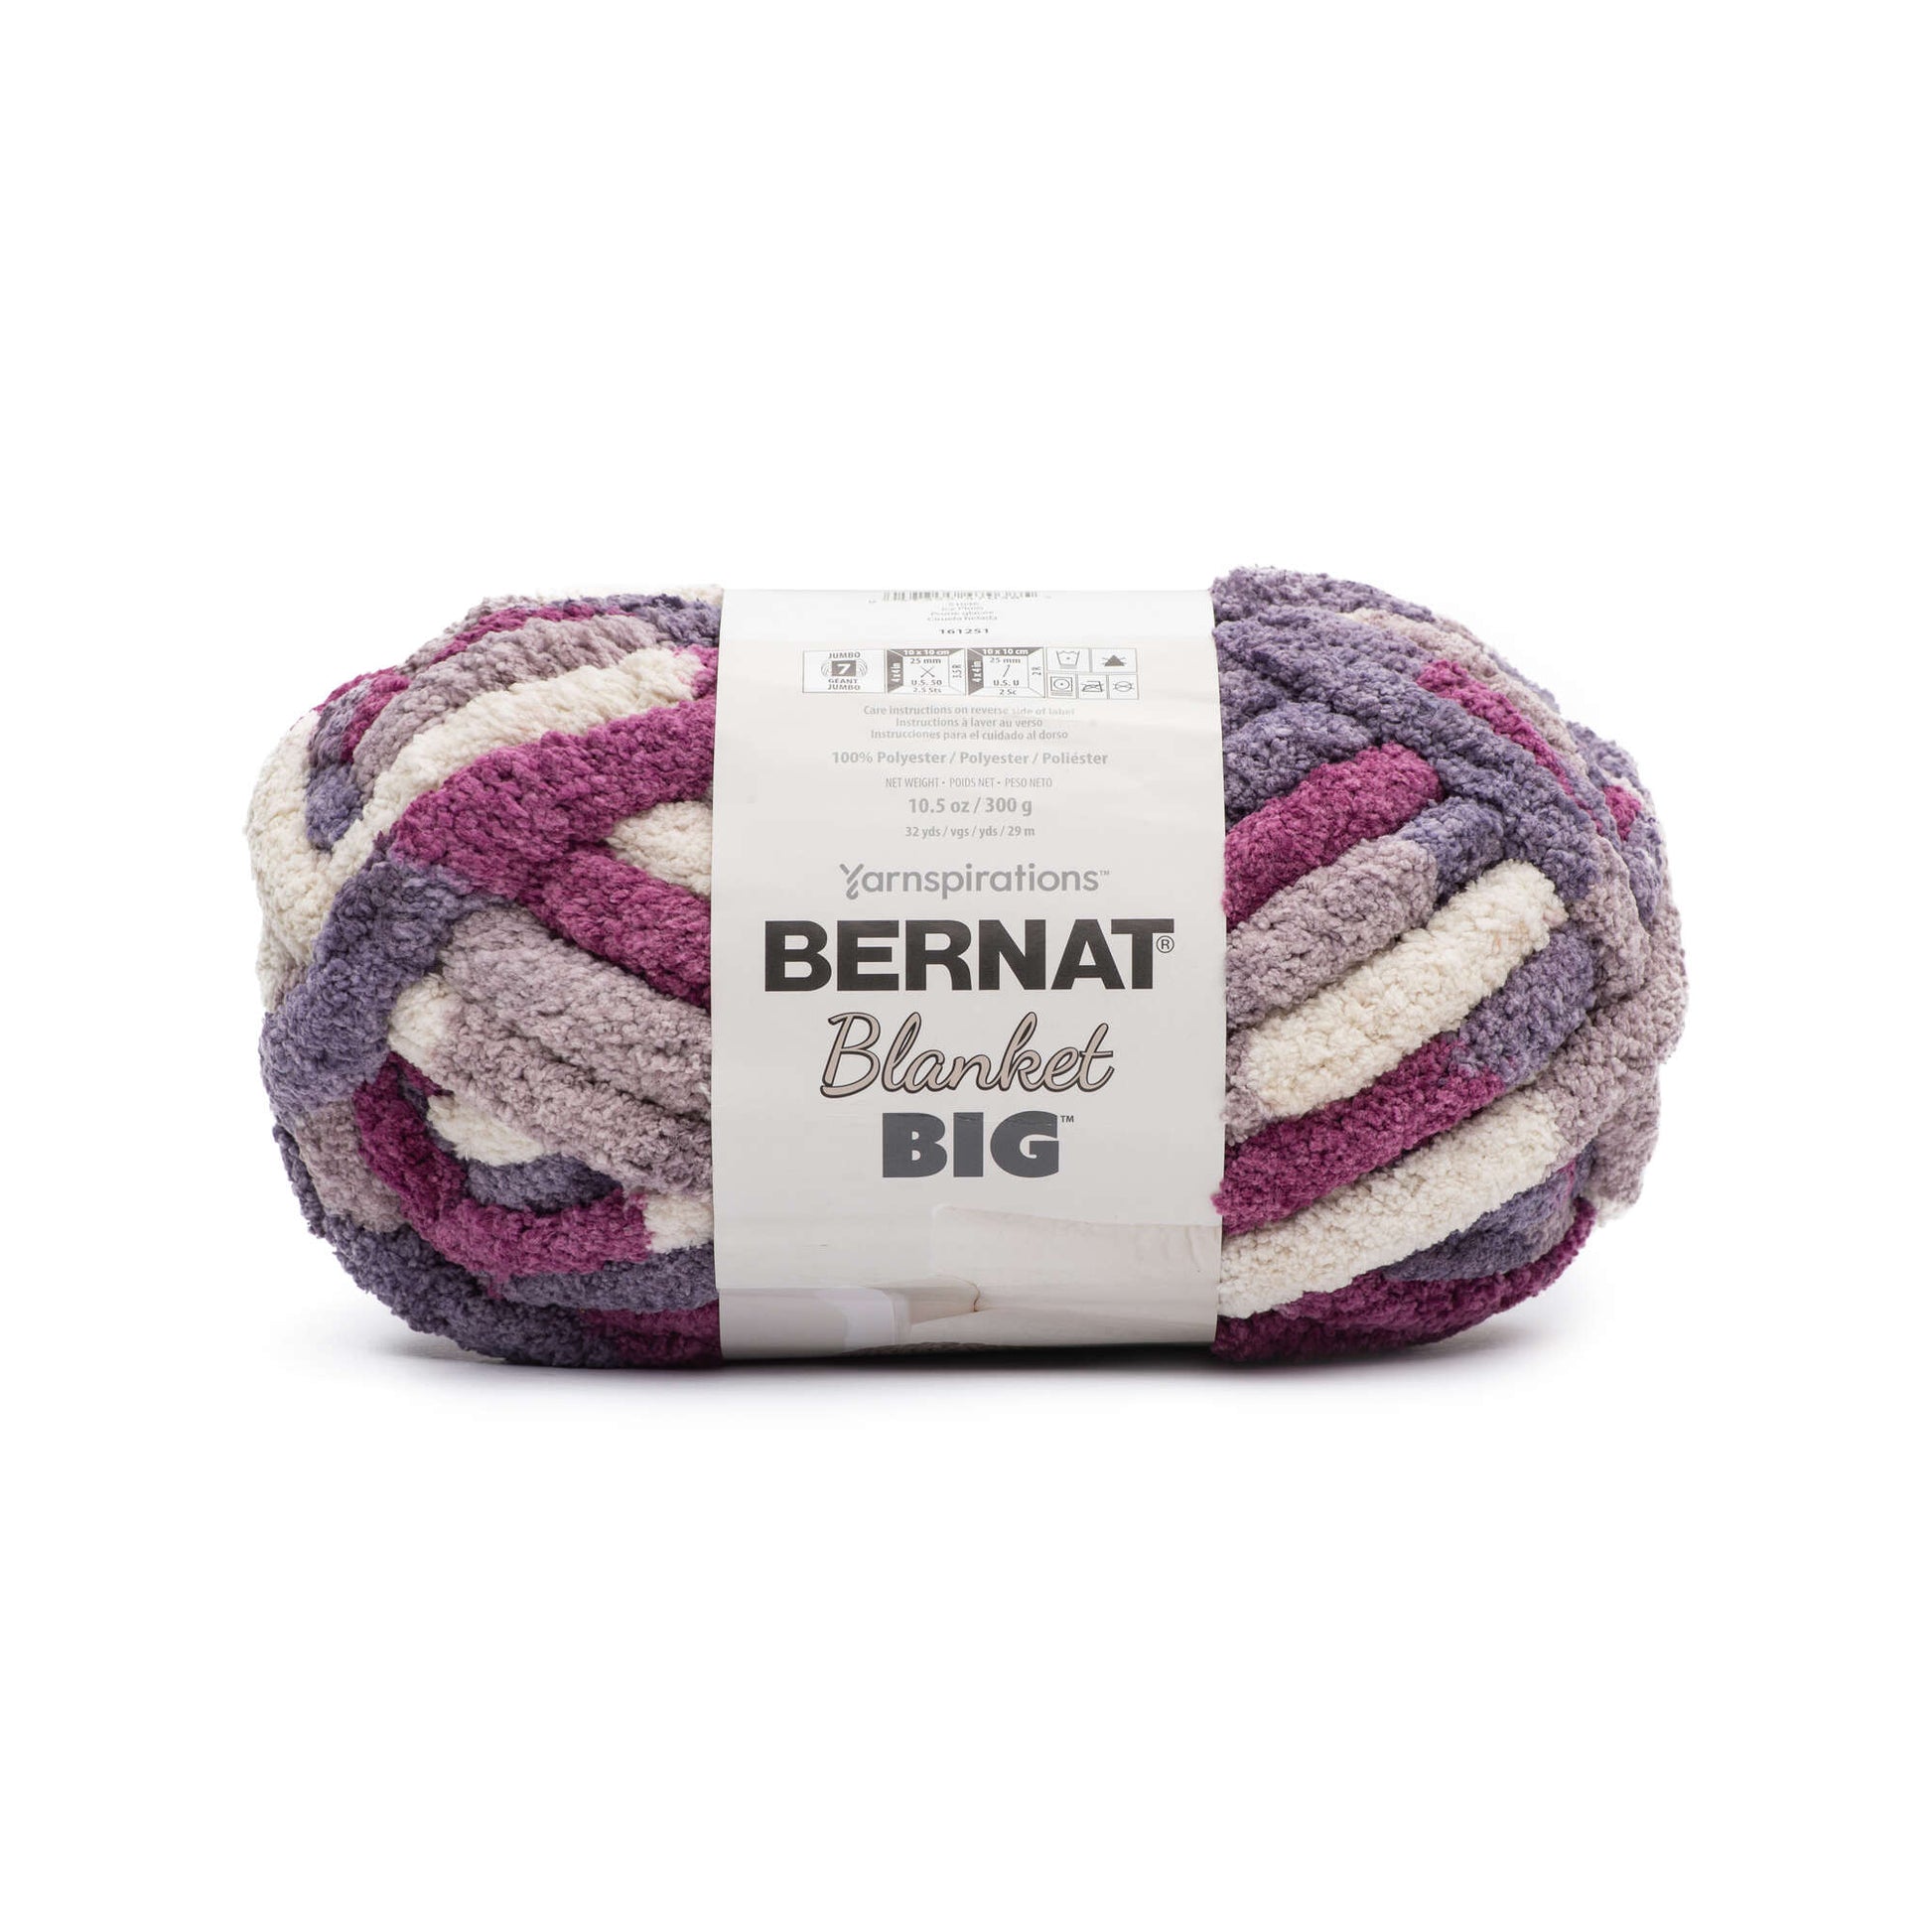 Bernat Blanket Big Yarn (300g/10.5oz) Icy Plum